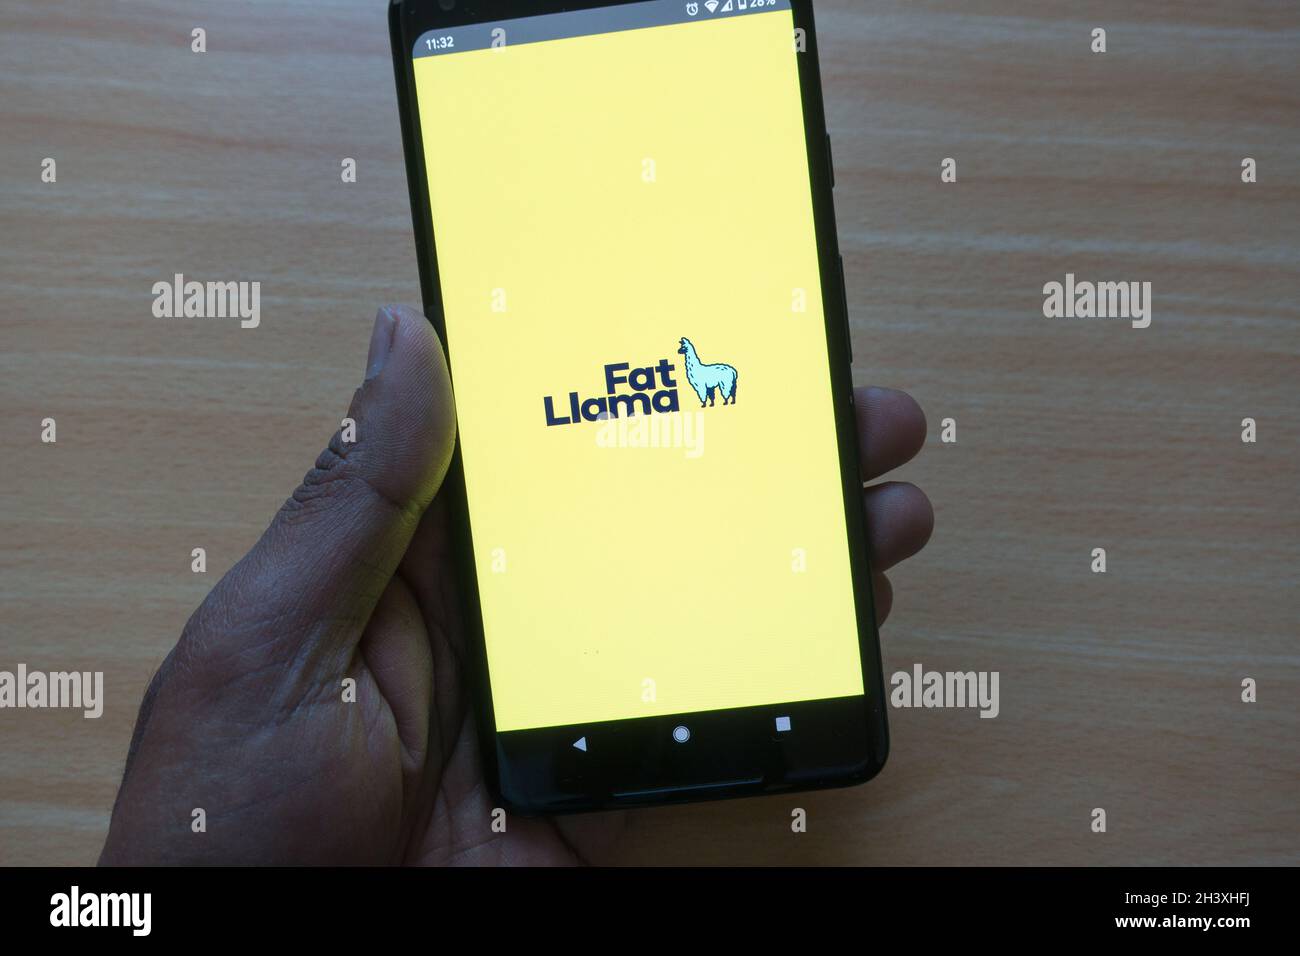 Fat Llama peer to peer lending app su smartphone tenuto da un maschio adulto Foto Stock